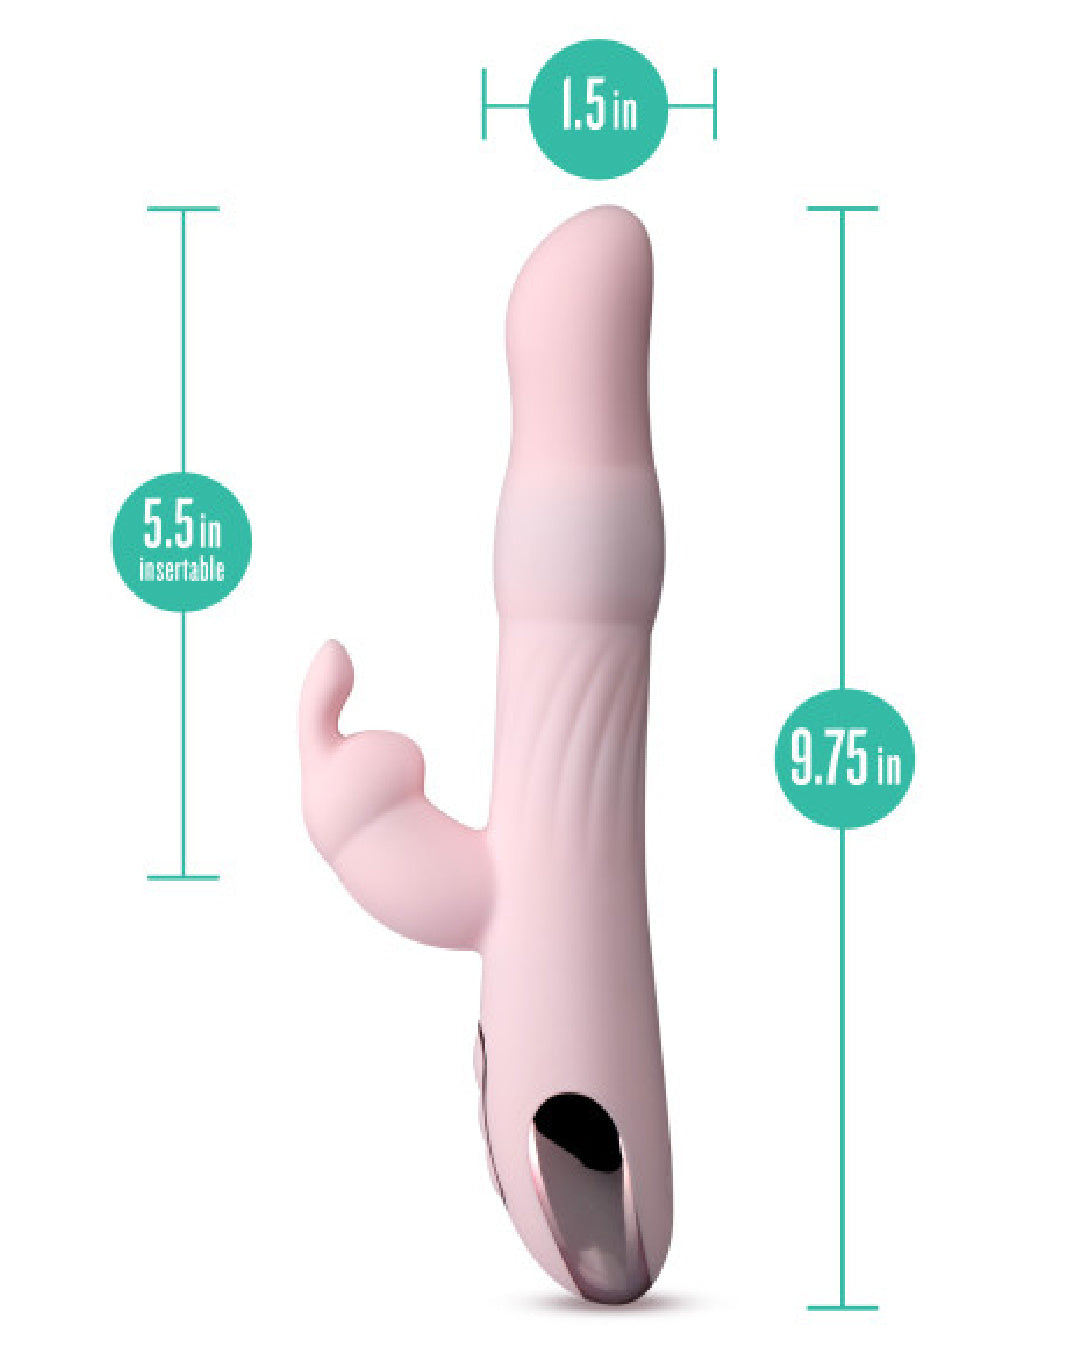 Lush Aurora Rabbit Vibrator - Pink graphic showing size 